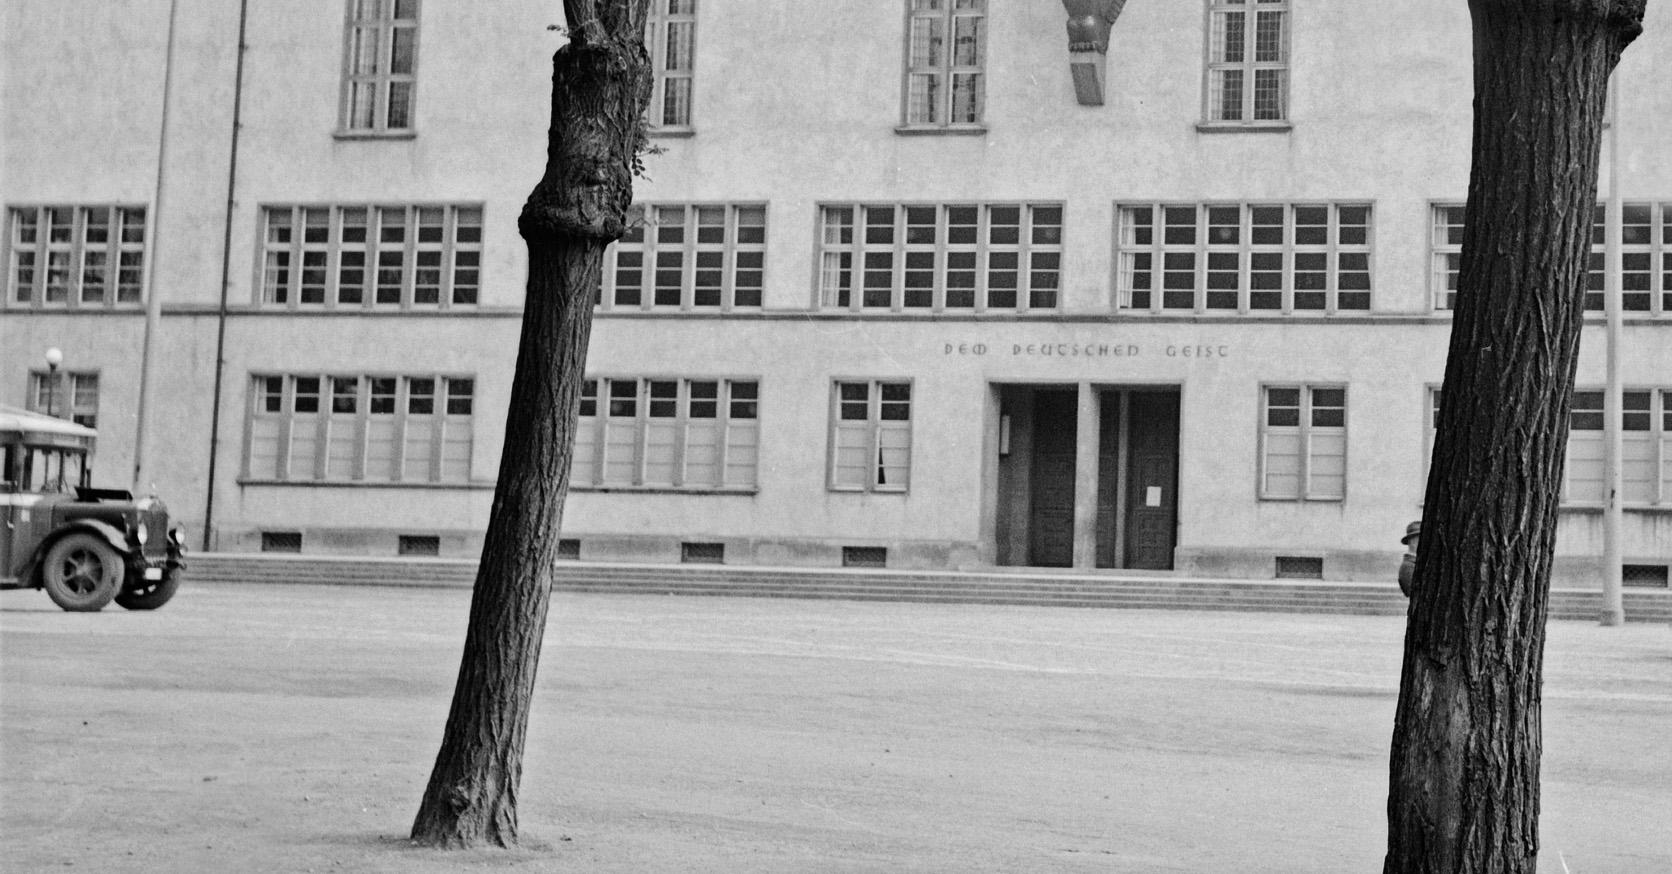 Building of Heidelberg university, Germany 1938, PrintedLater - Photograph by Karl Heinrich Lämmel